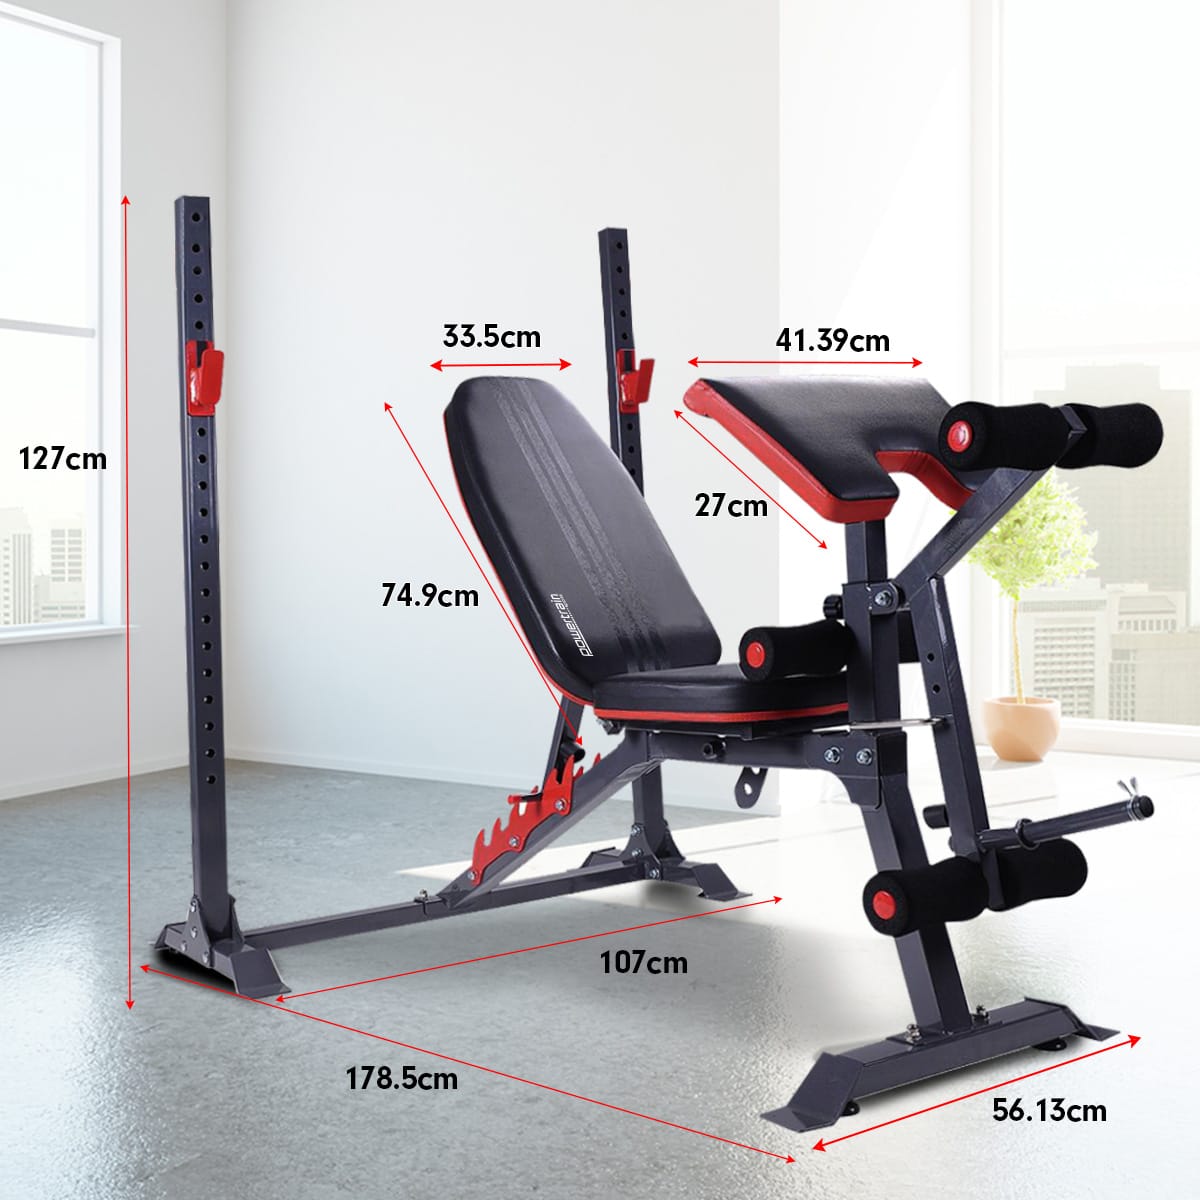 Powertrain Adjustable Weight Bench Home Gym Bench Press - 301